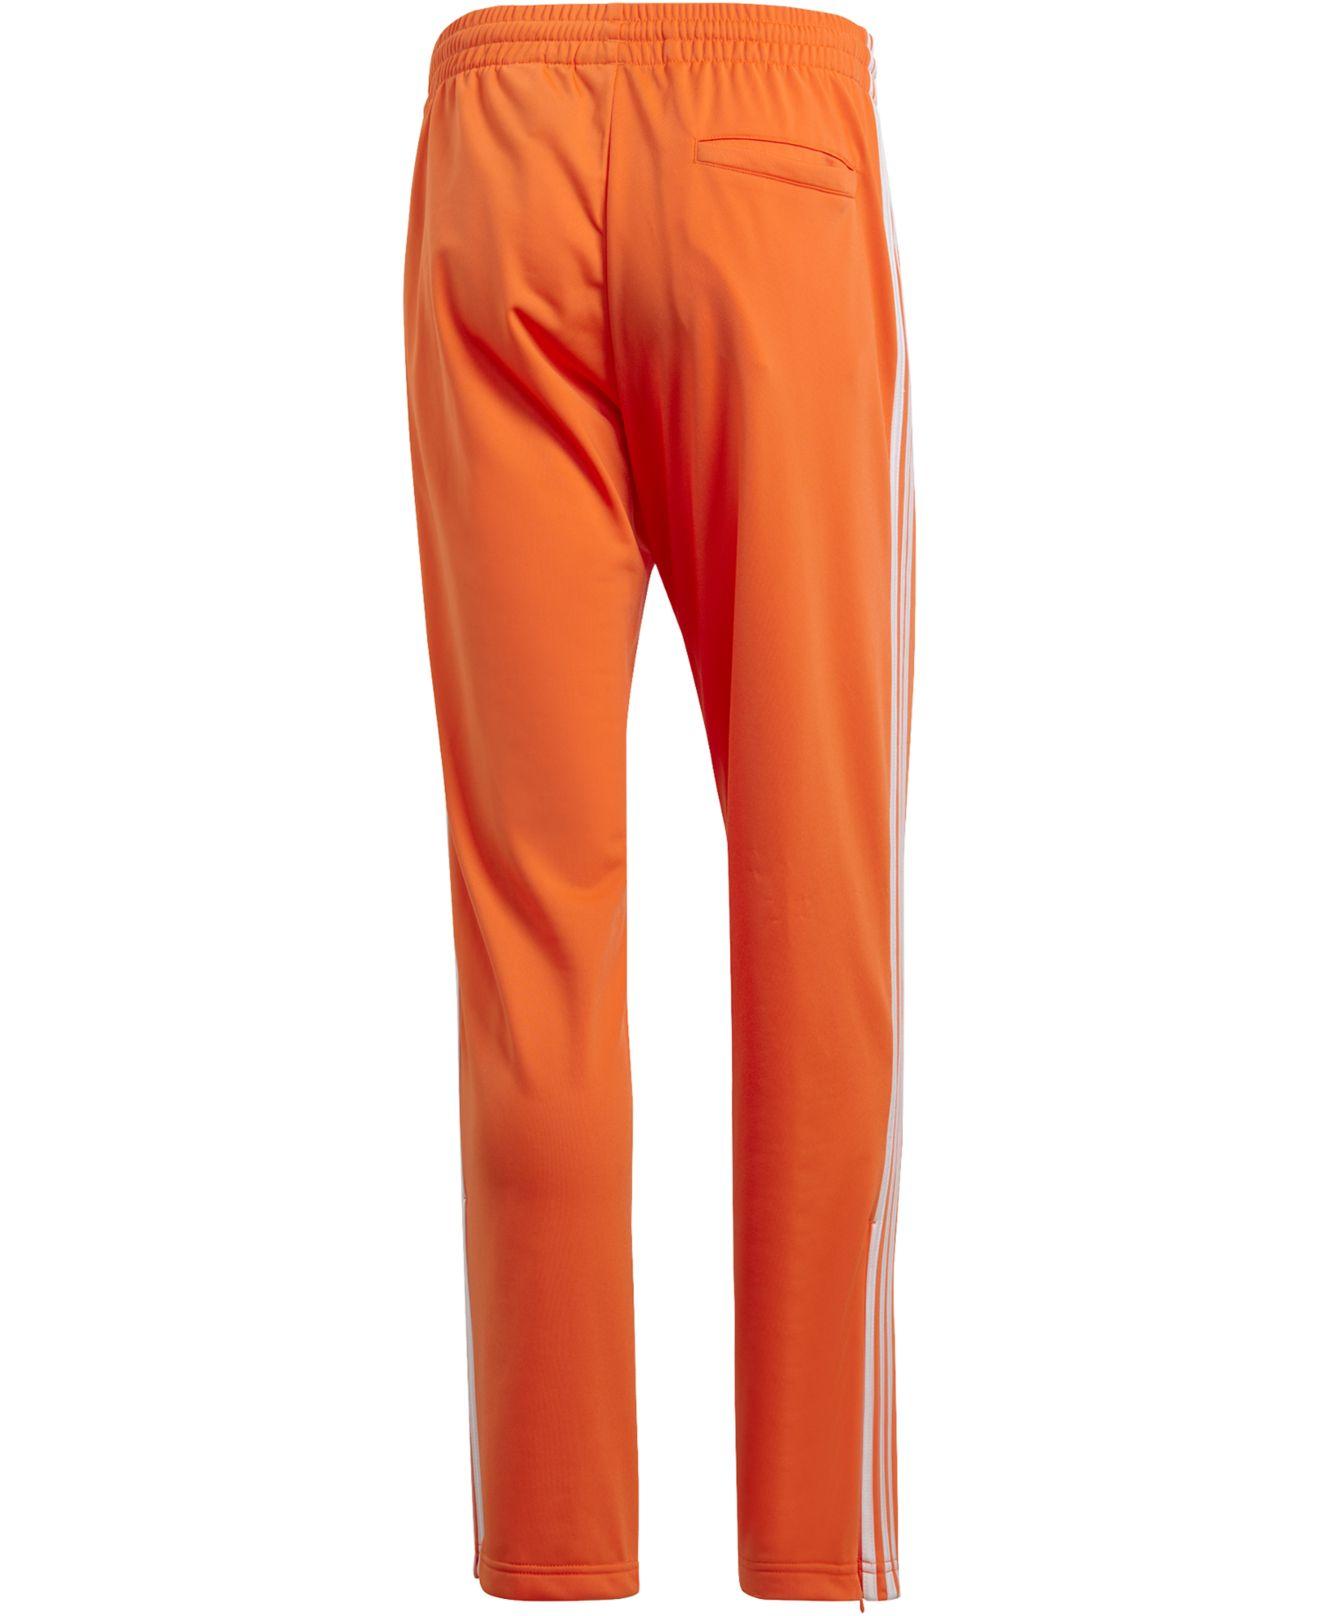 firebird track pants orange